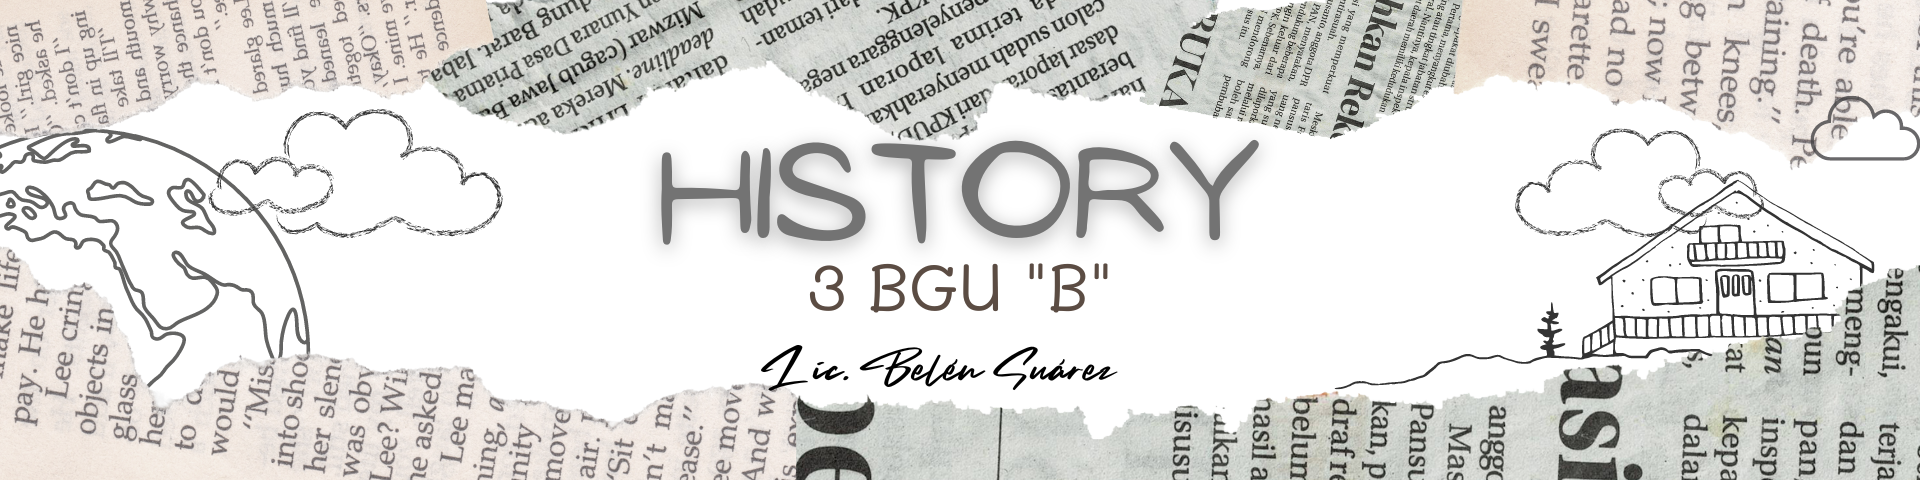 Historia Tercero BGU 'B'